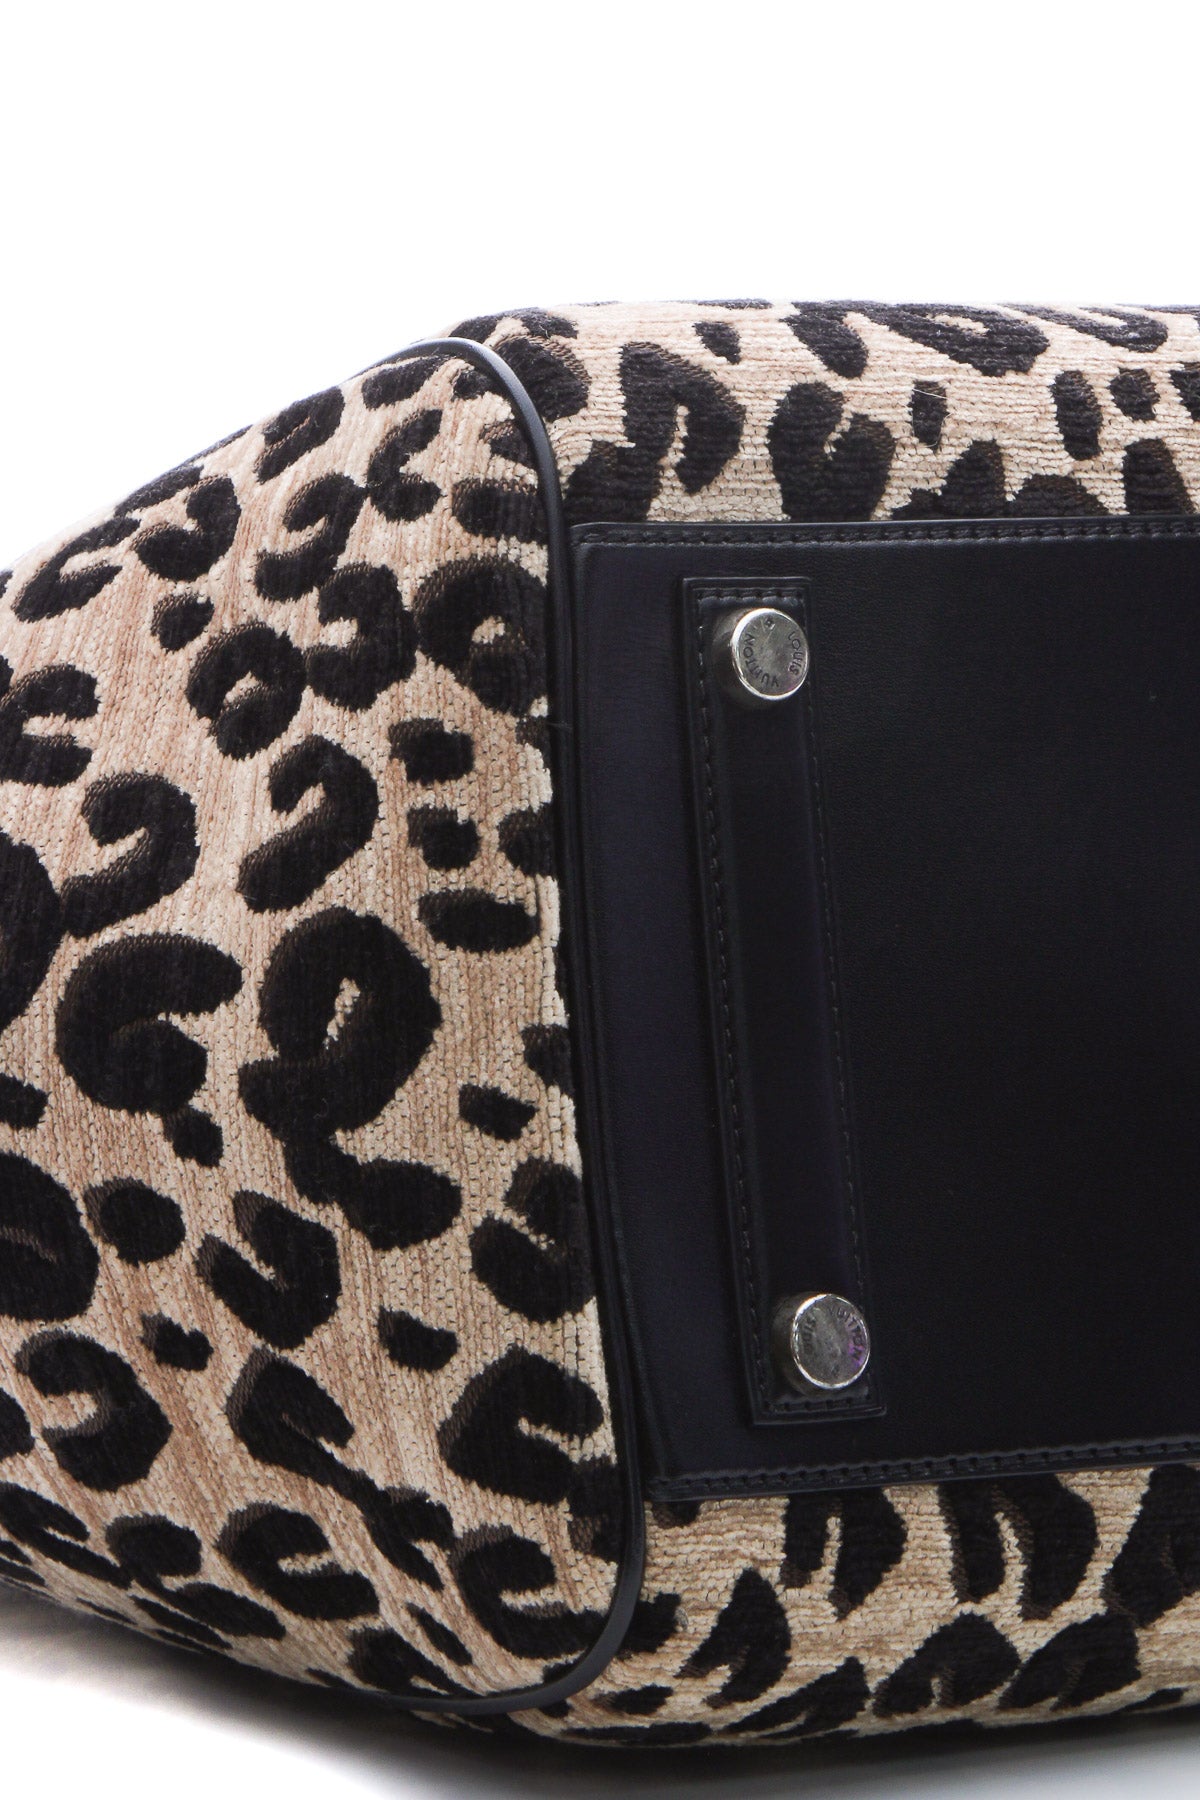 vuitton stephen sprouse leopard bag